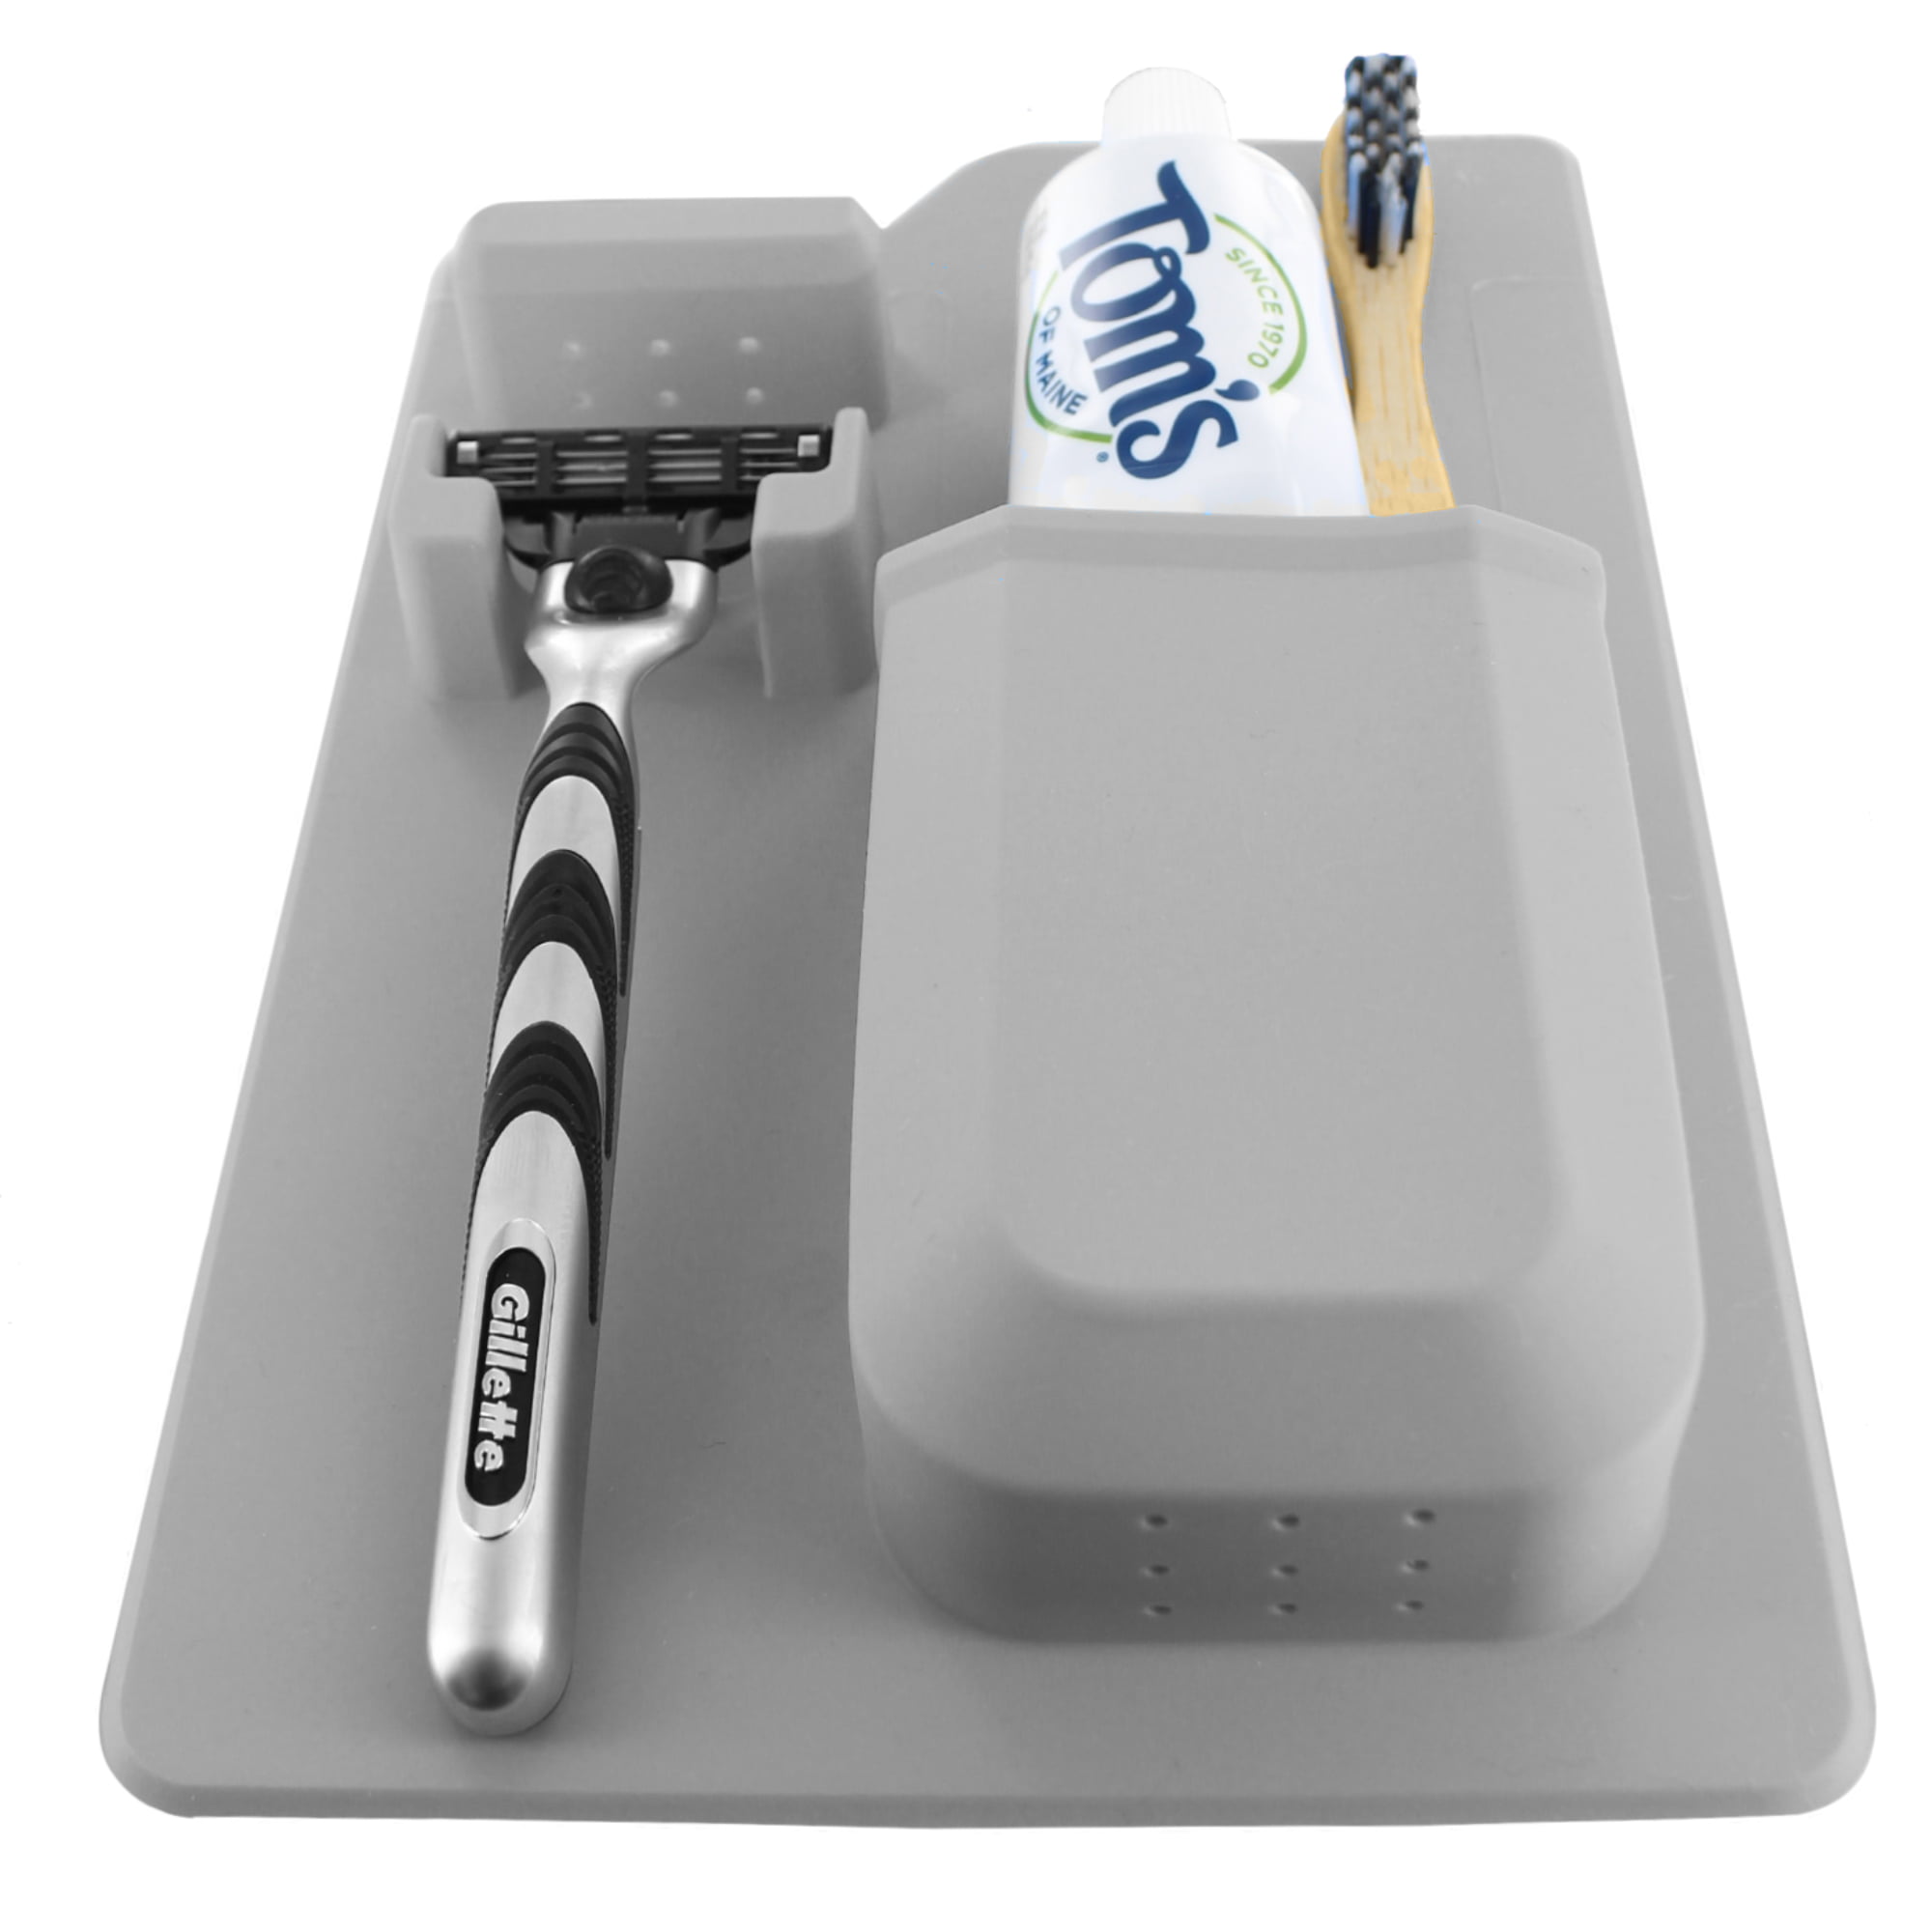 Silicone Toothbrush Toothpaste Holder Stand Razor Rack Storage Toiletry Bathroom